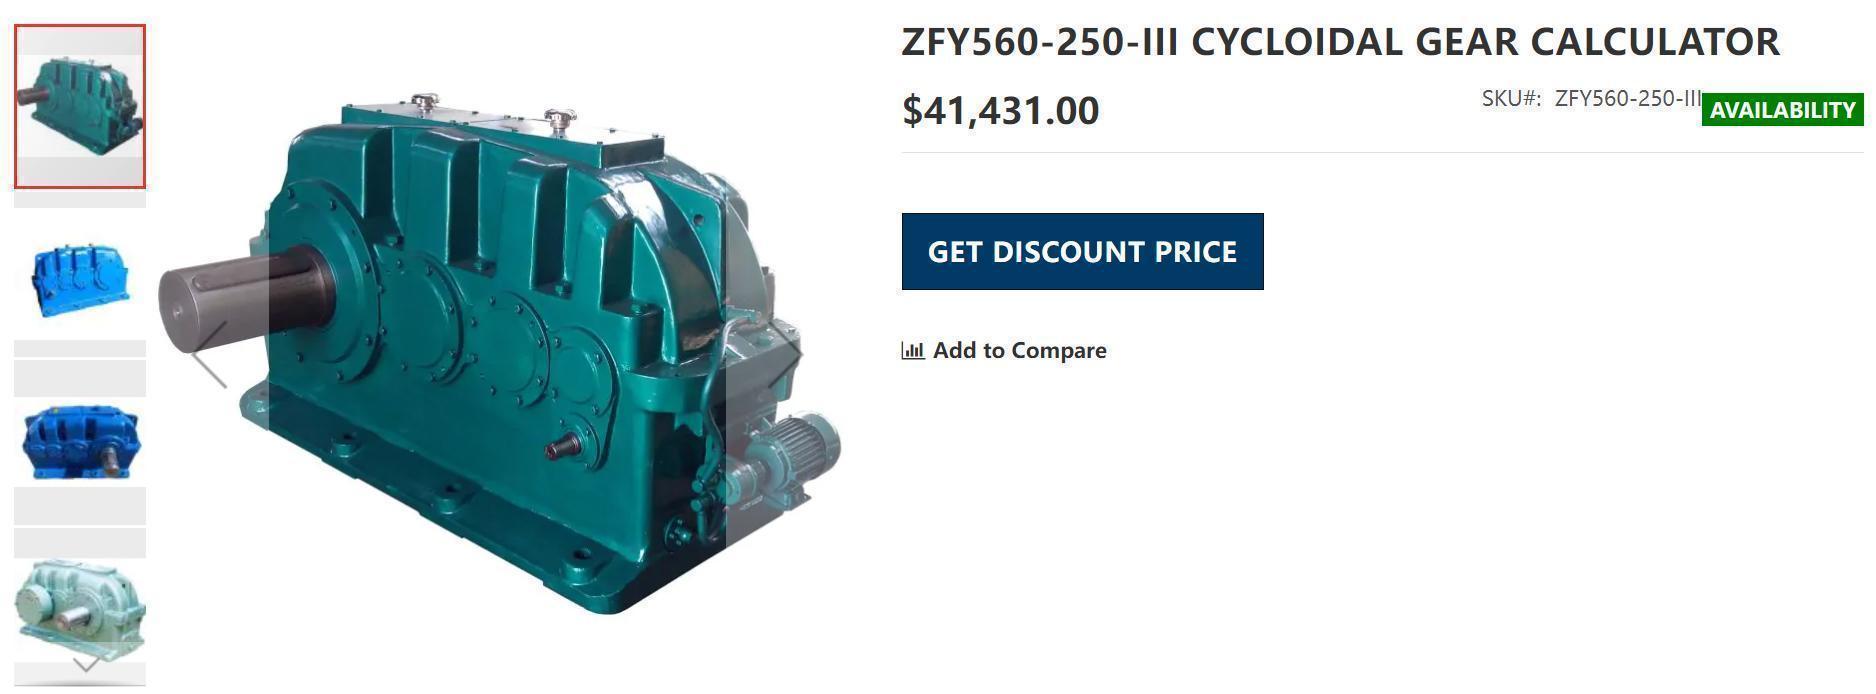 Produttore-ZFY560-250-III